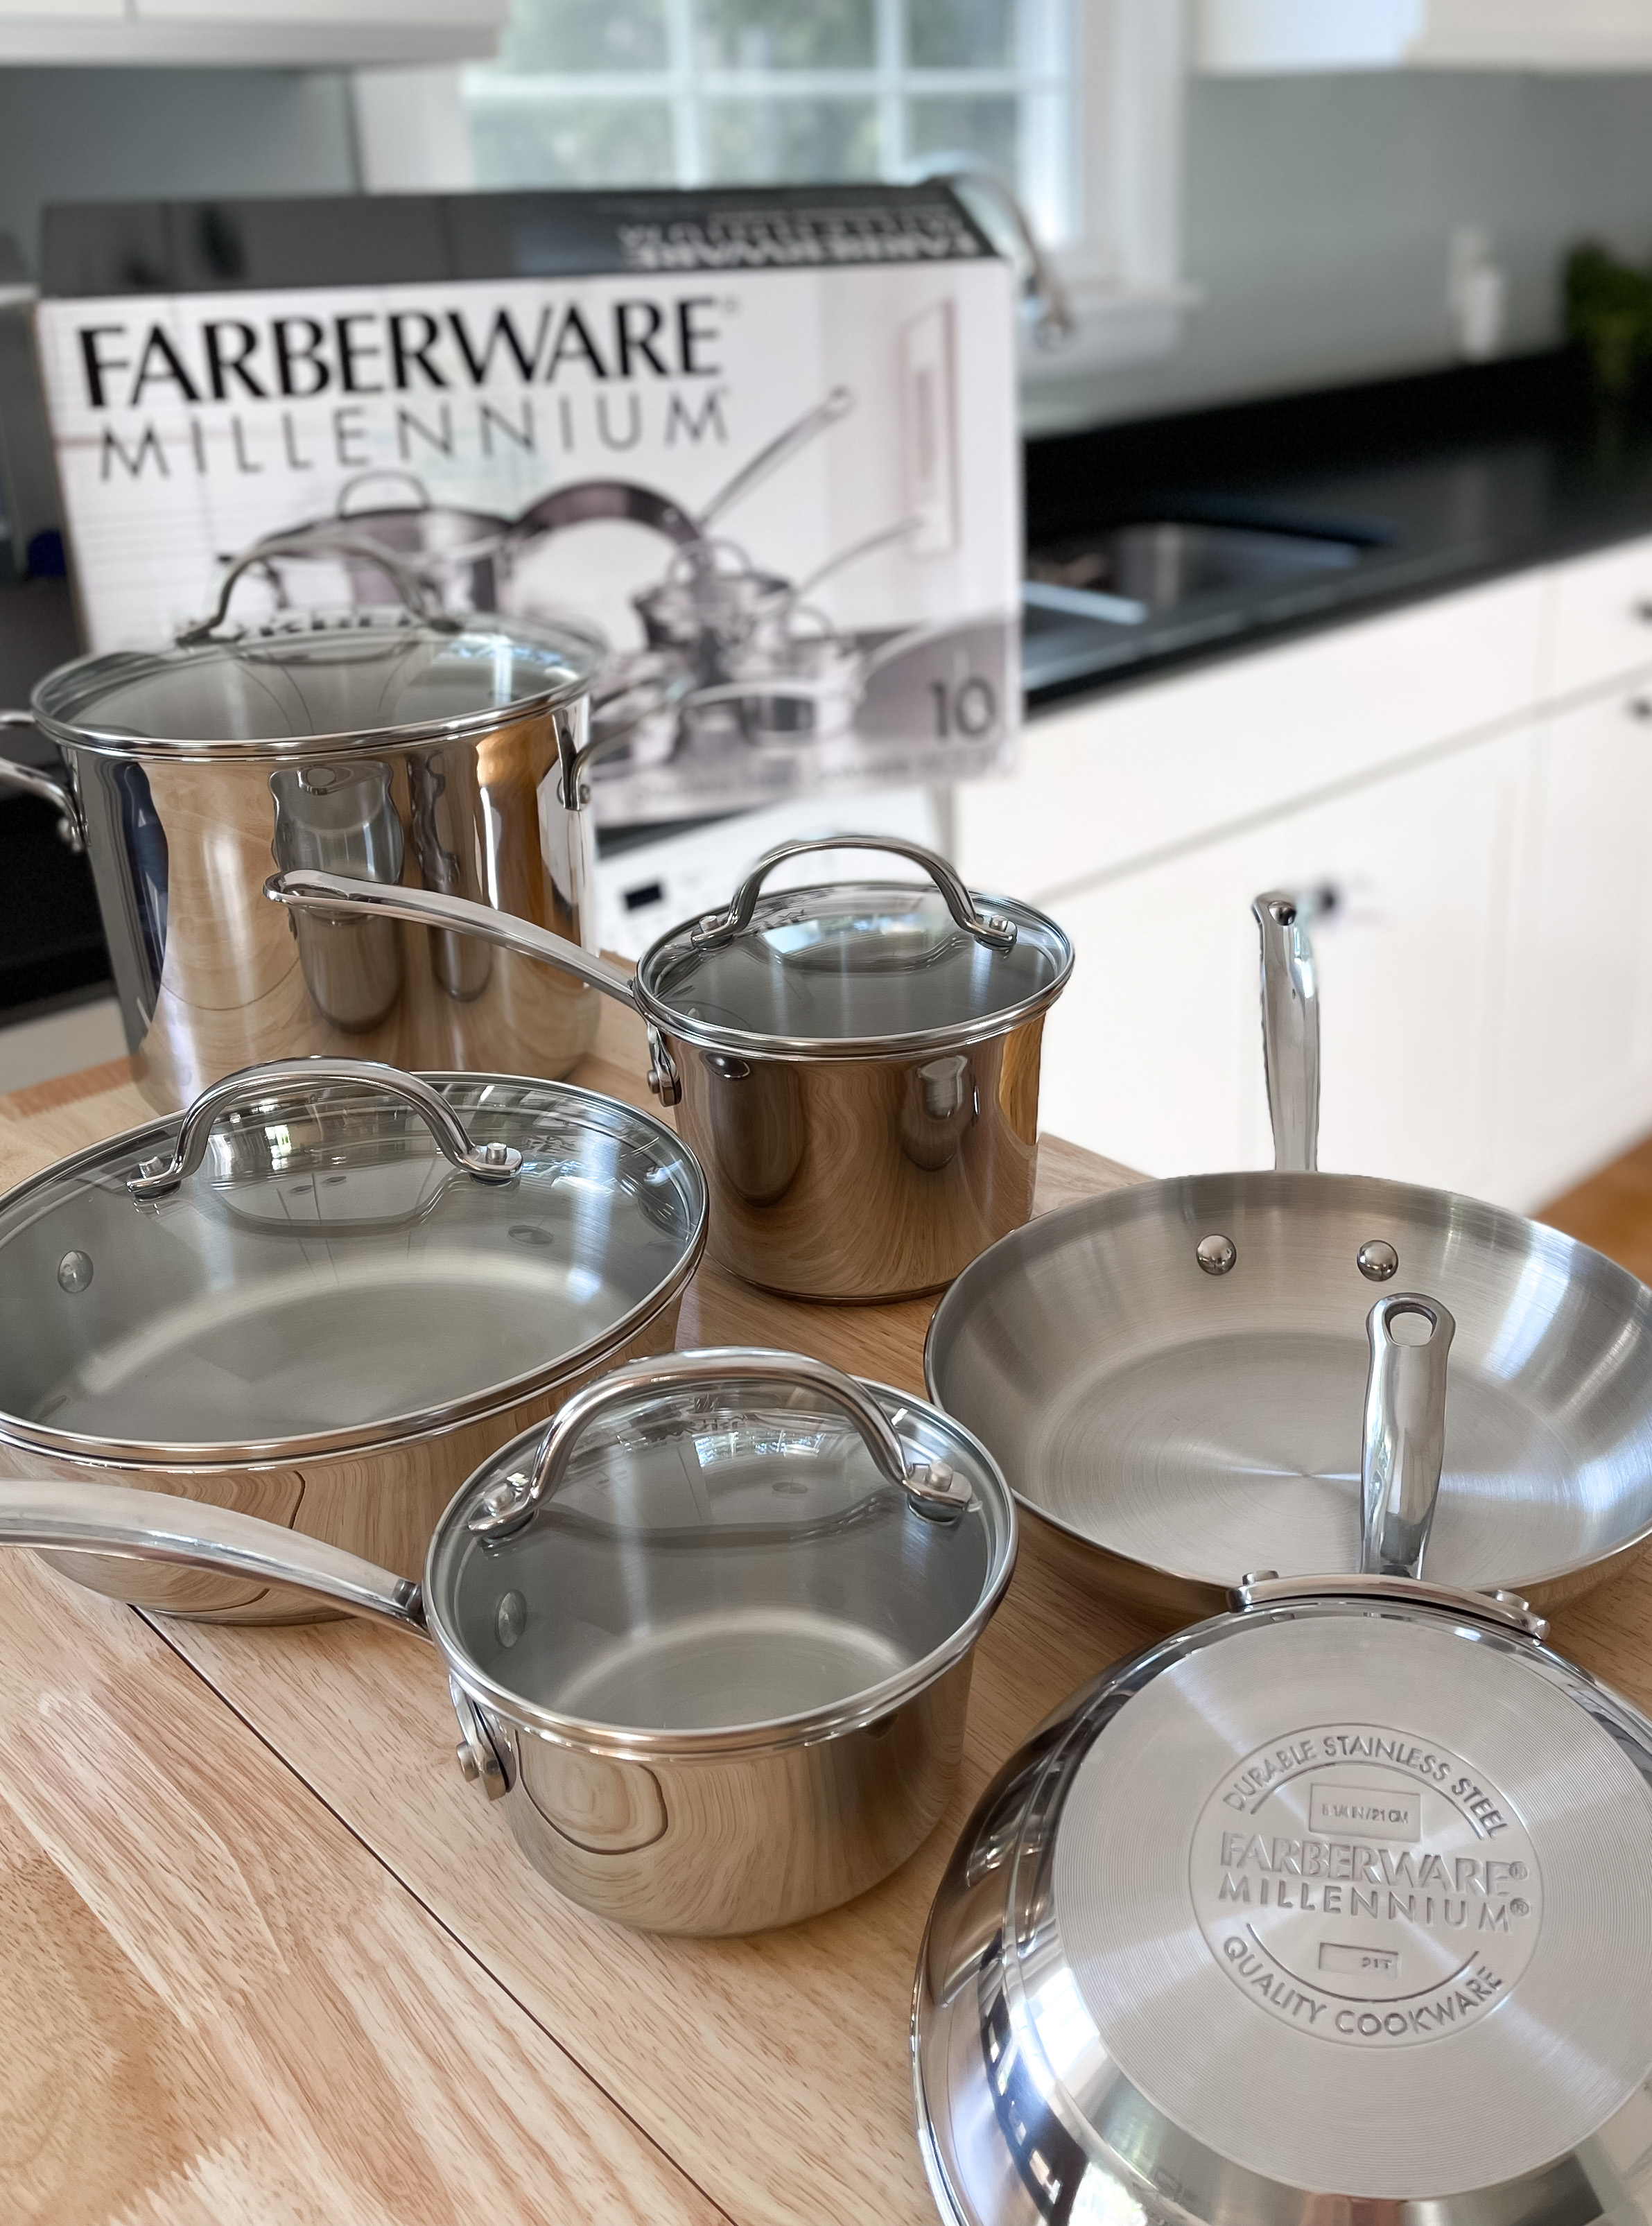 Farberware stainless steel cookware 10-piece set